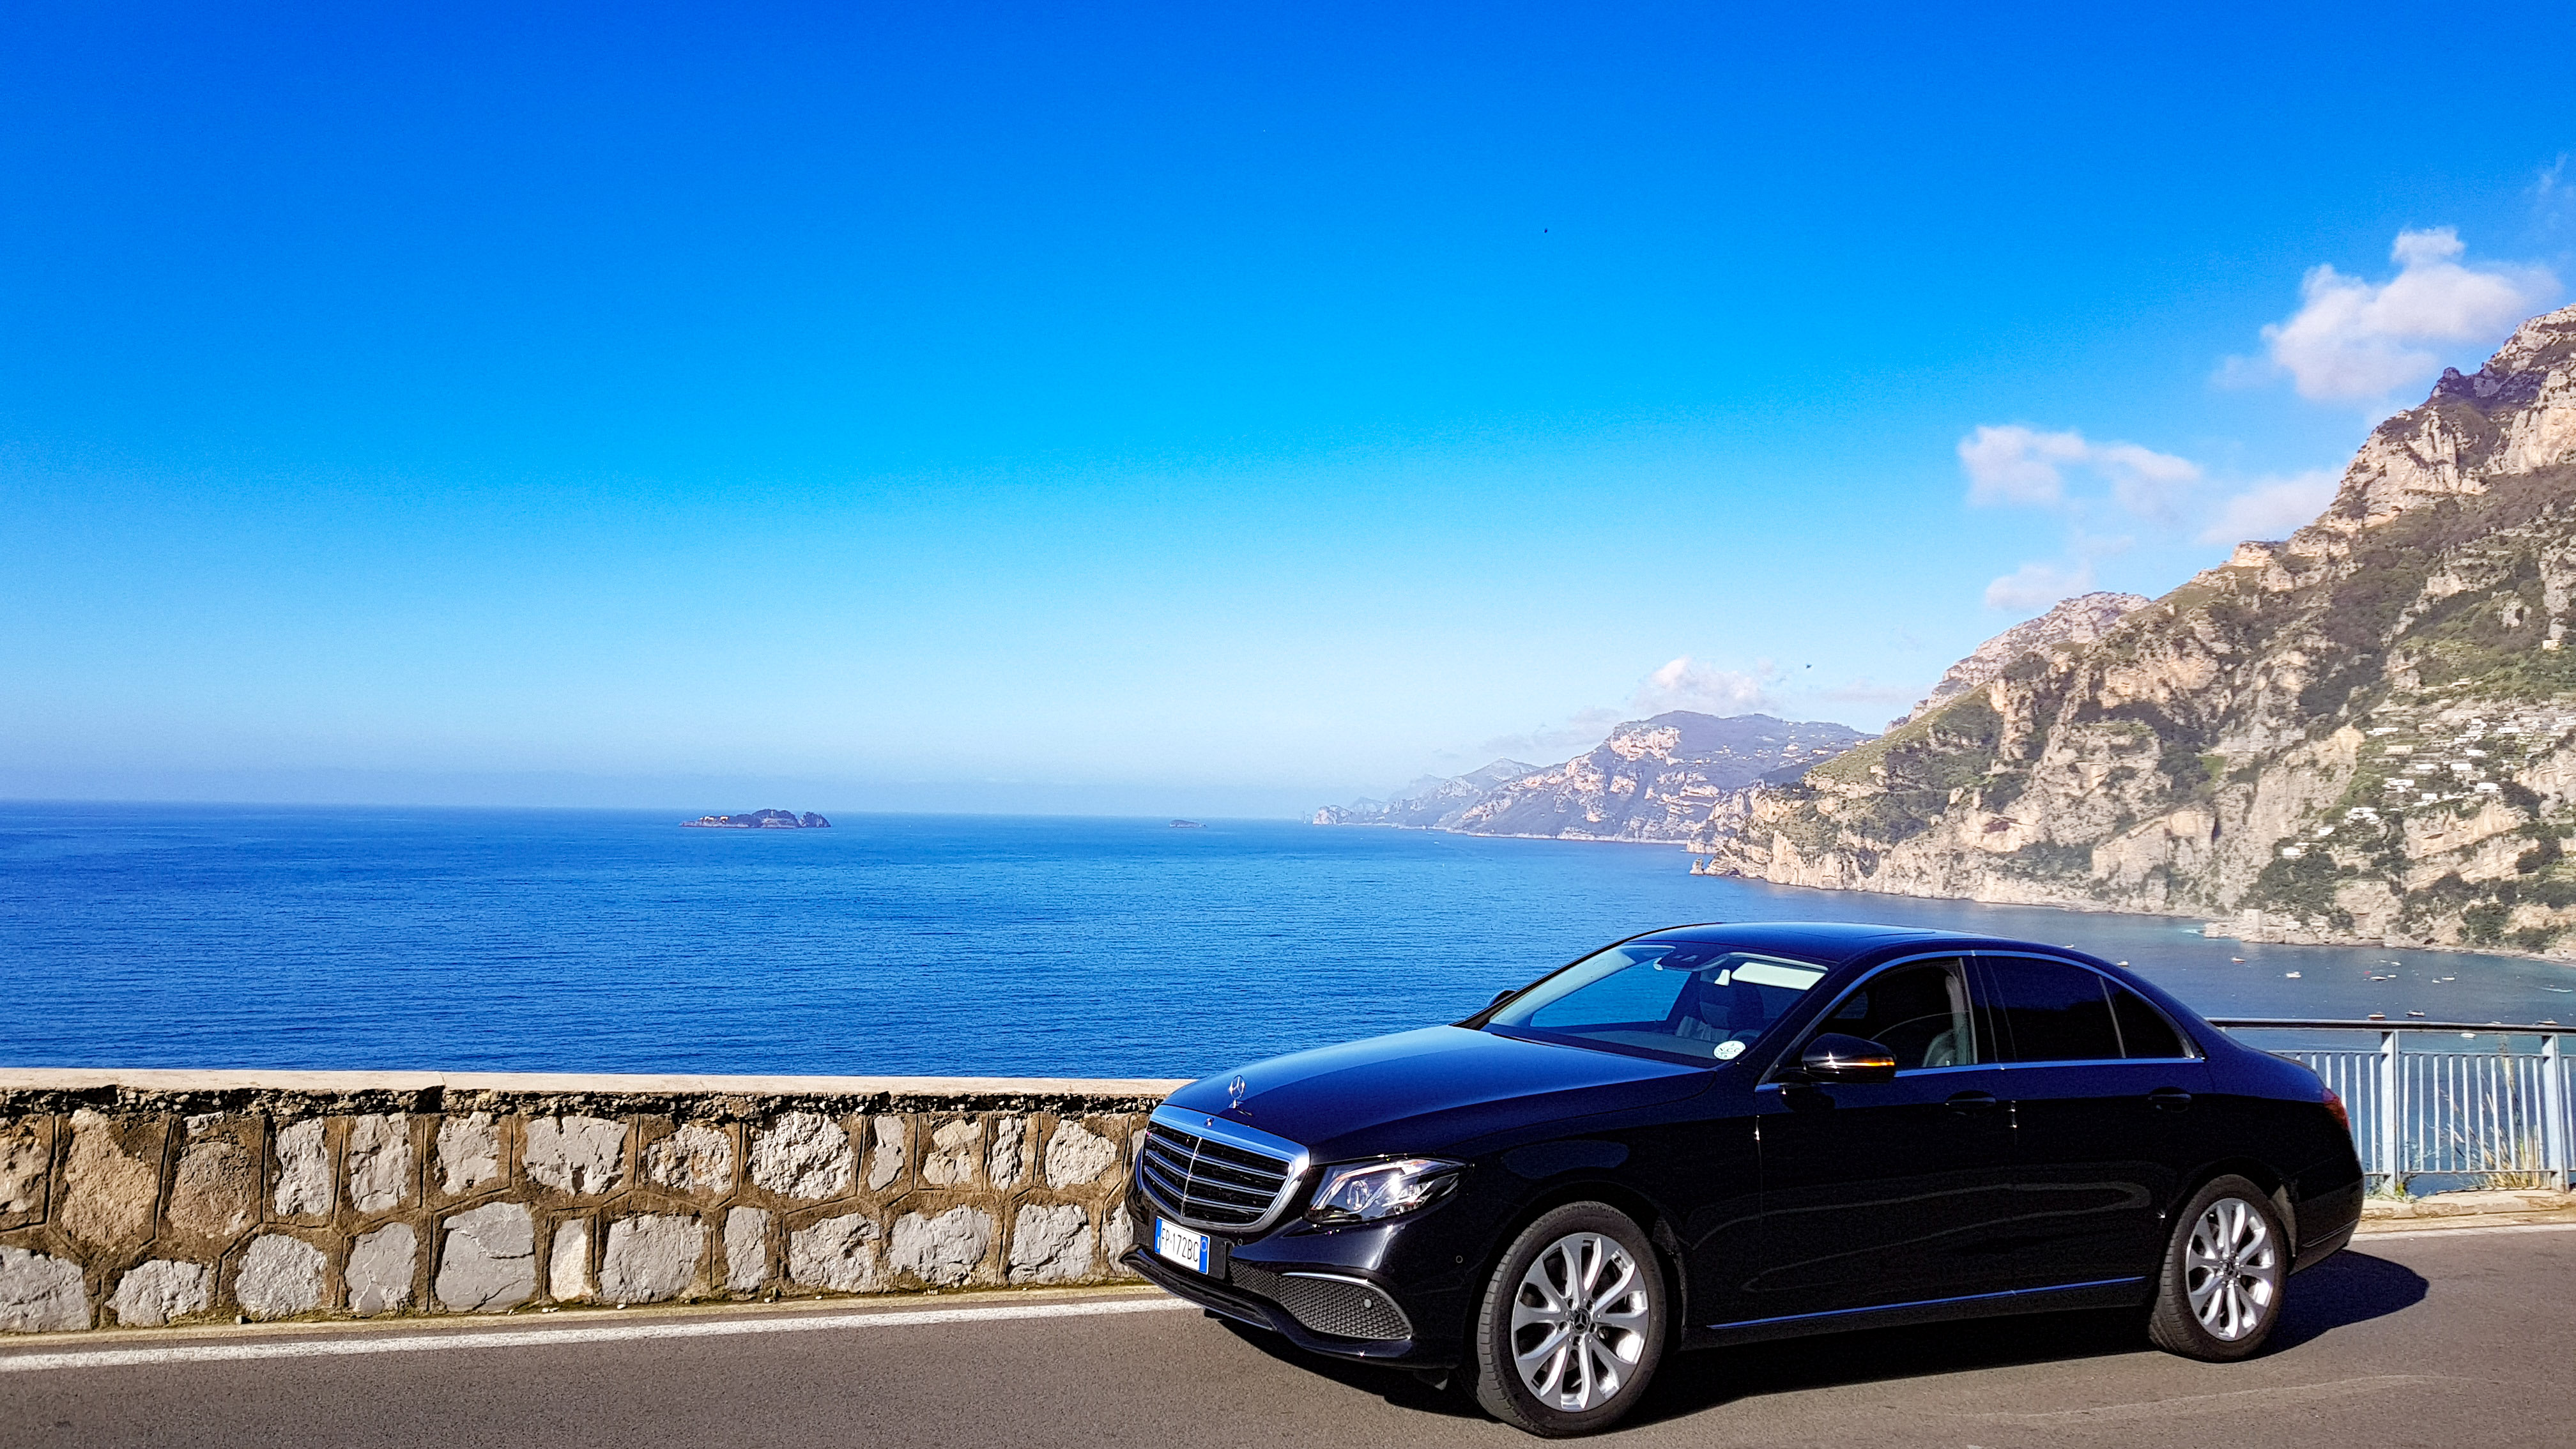 Private sedan car touring the Amalfi Coast scenic drive